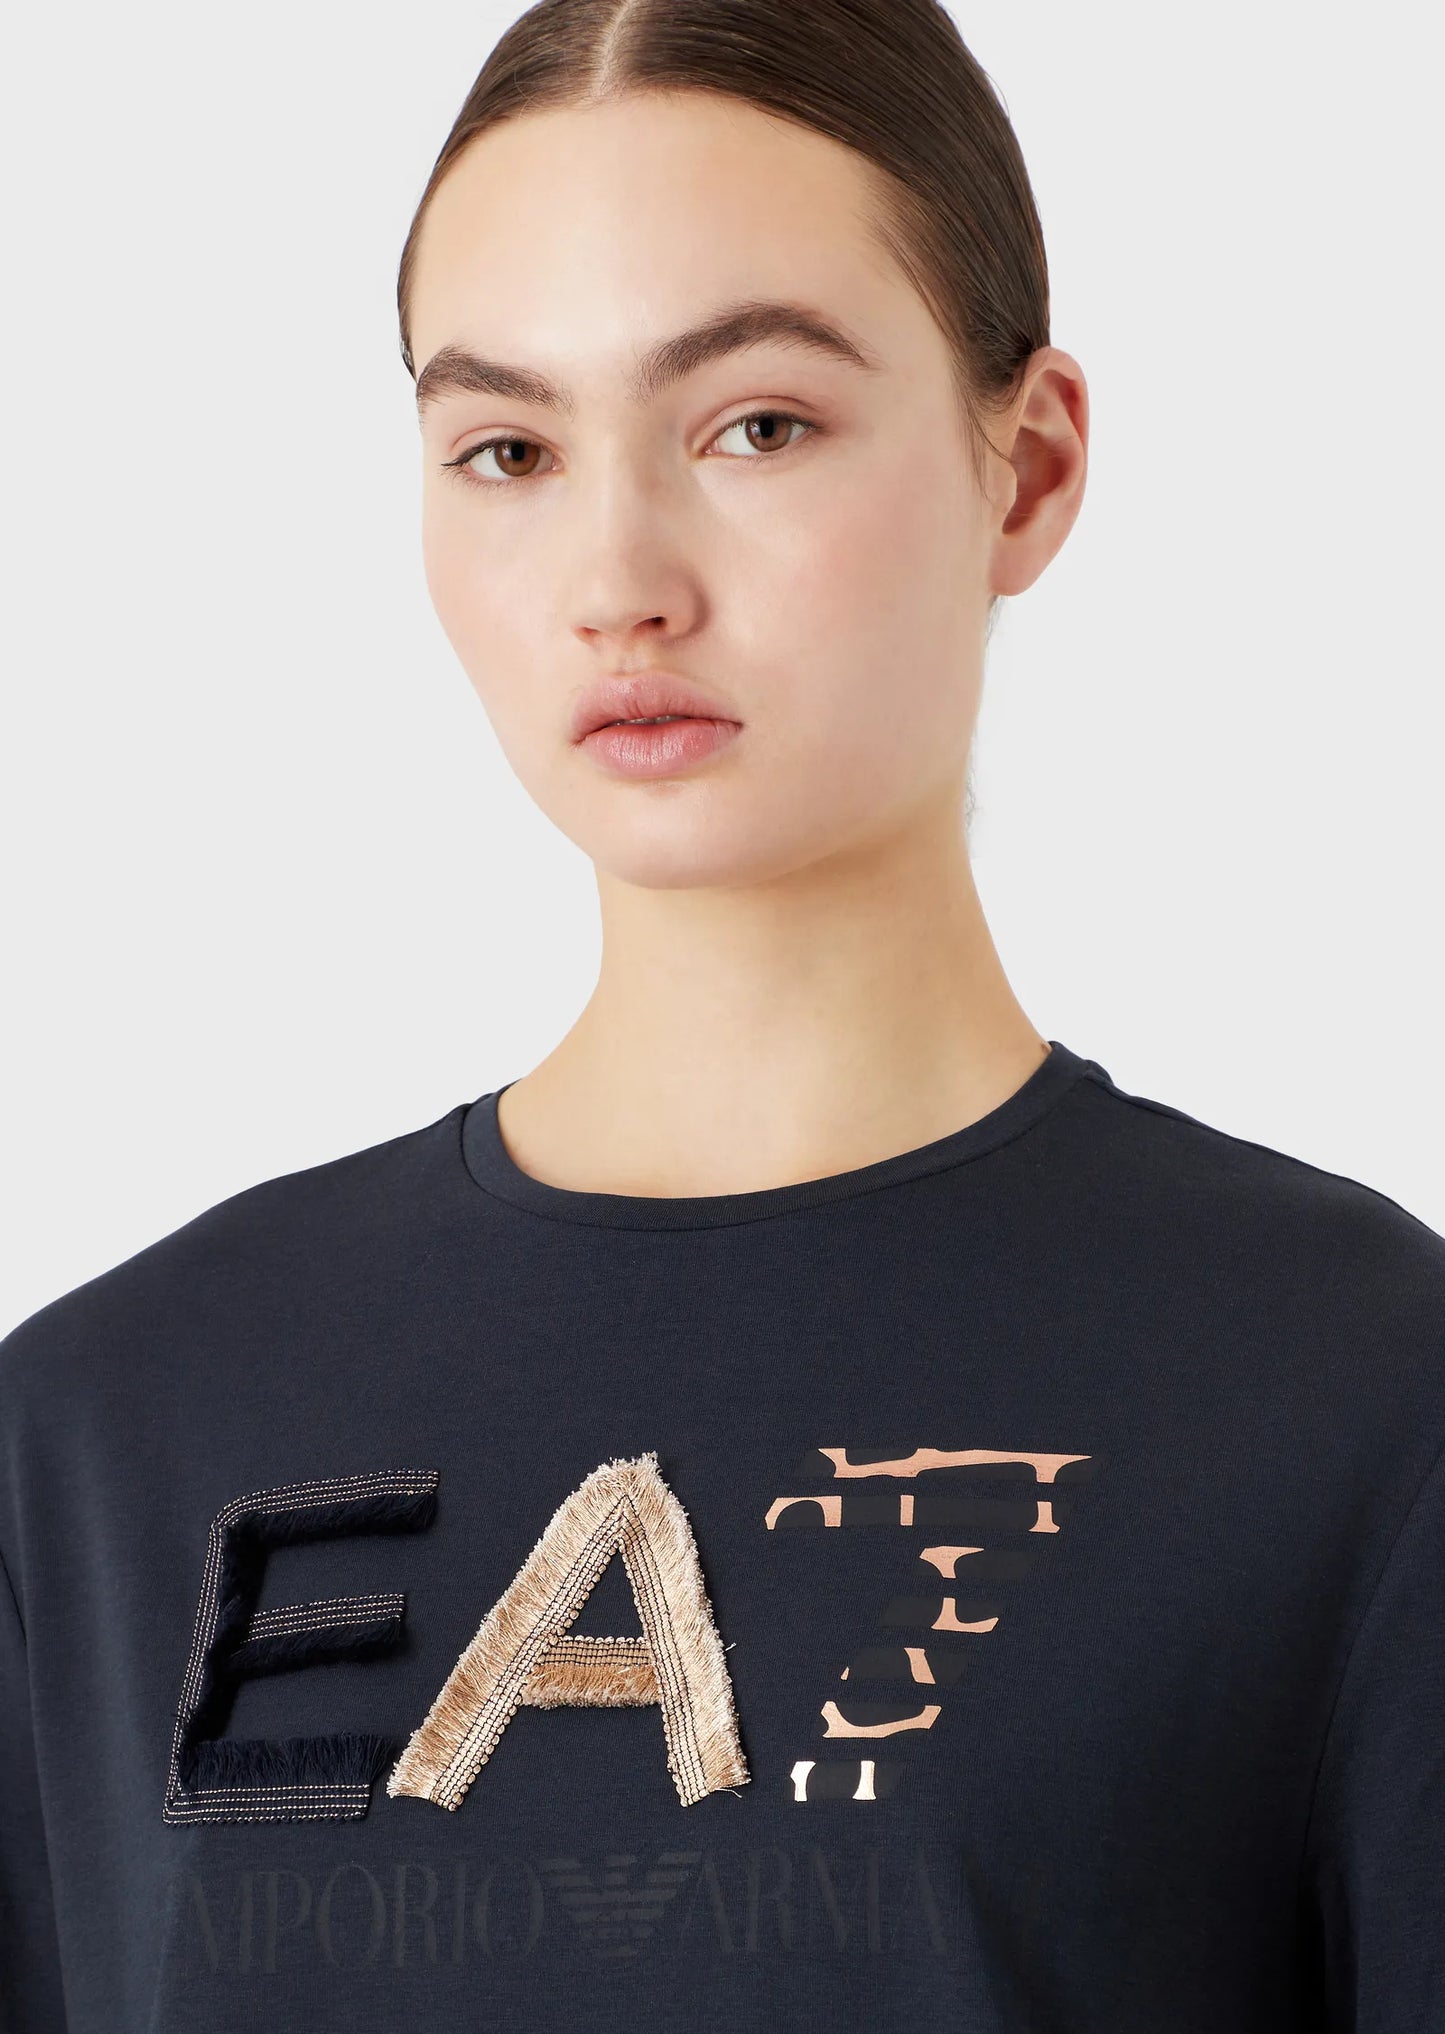 EA7 Emporio Armani T-Shirt Femme 3RTT36 TJDZZ Bleu Marine